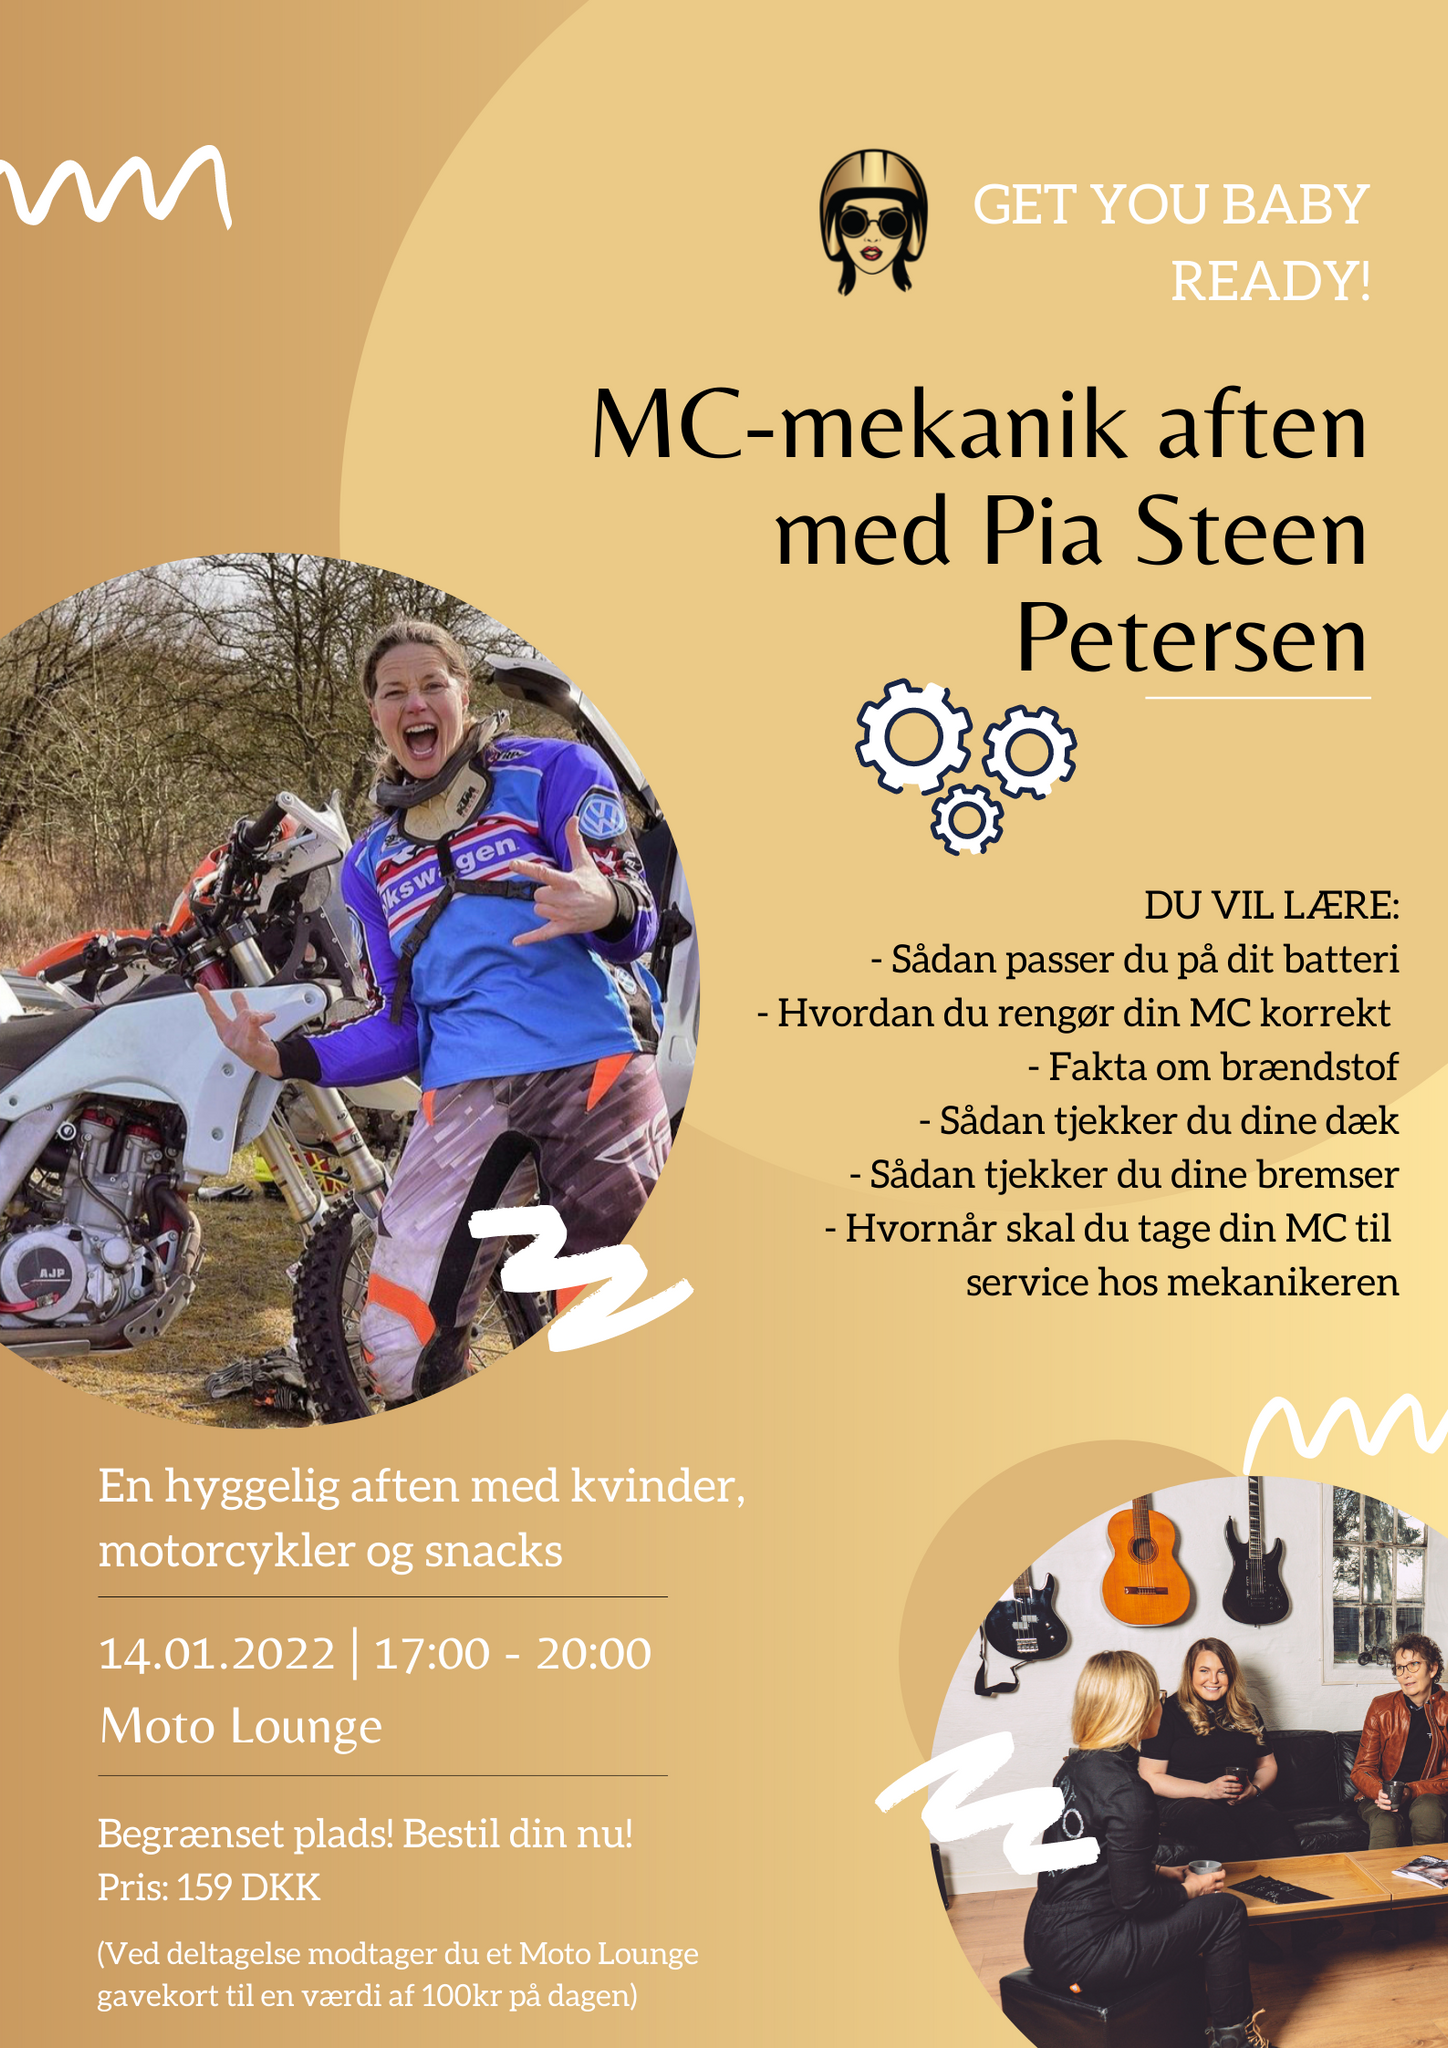 Poster for Moto Lounge event MC-mekanik aften med Pia